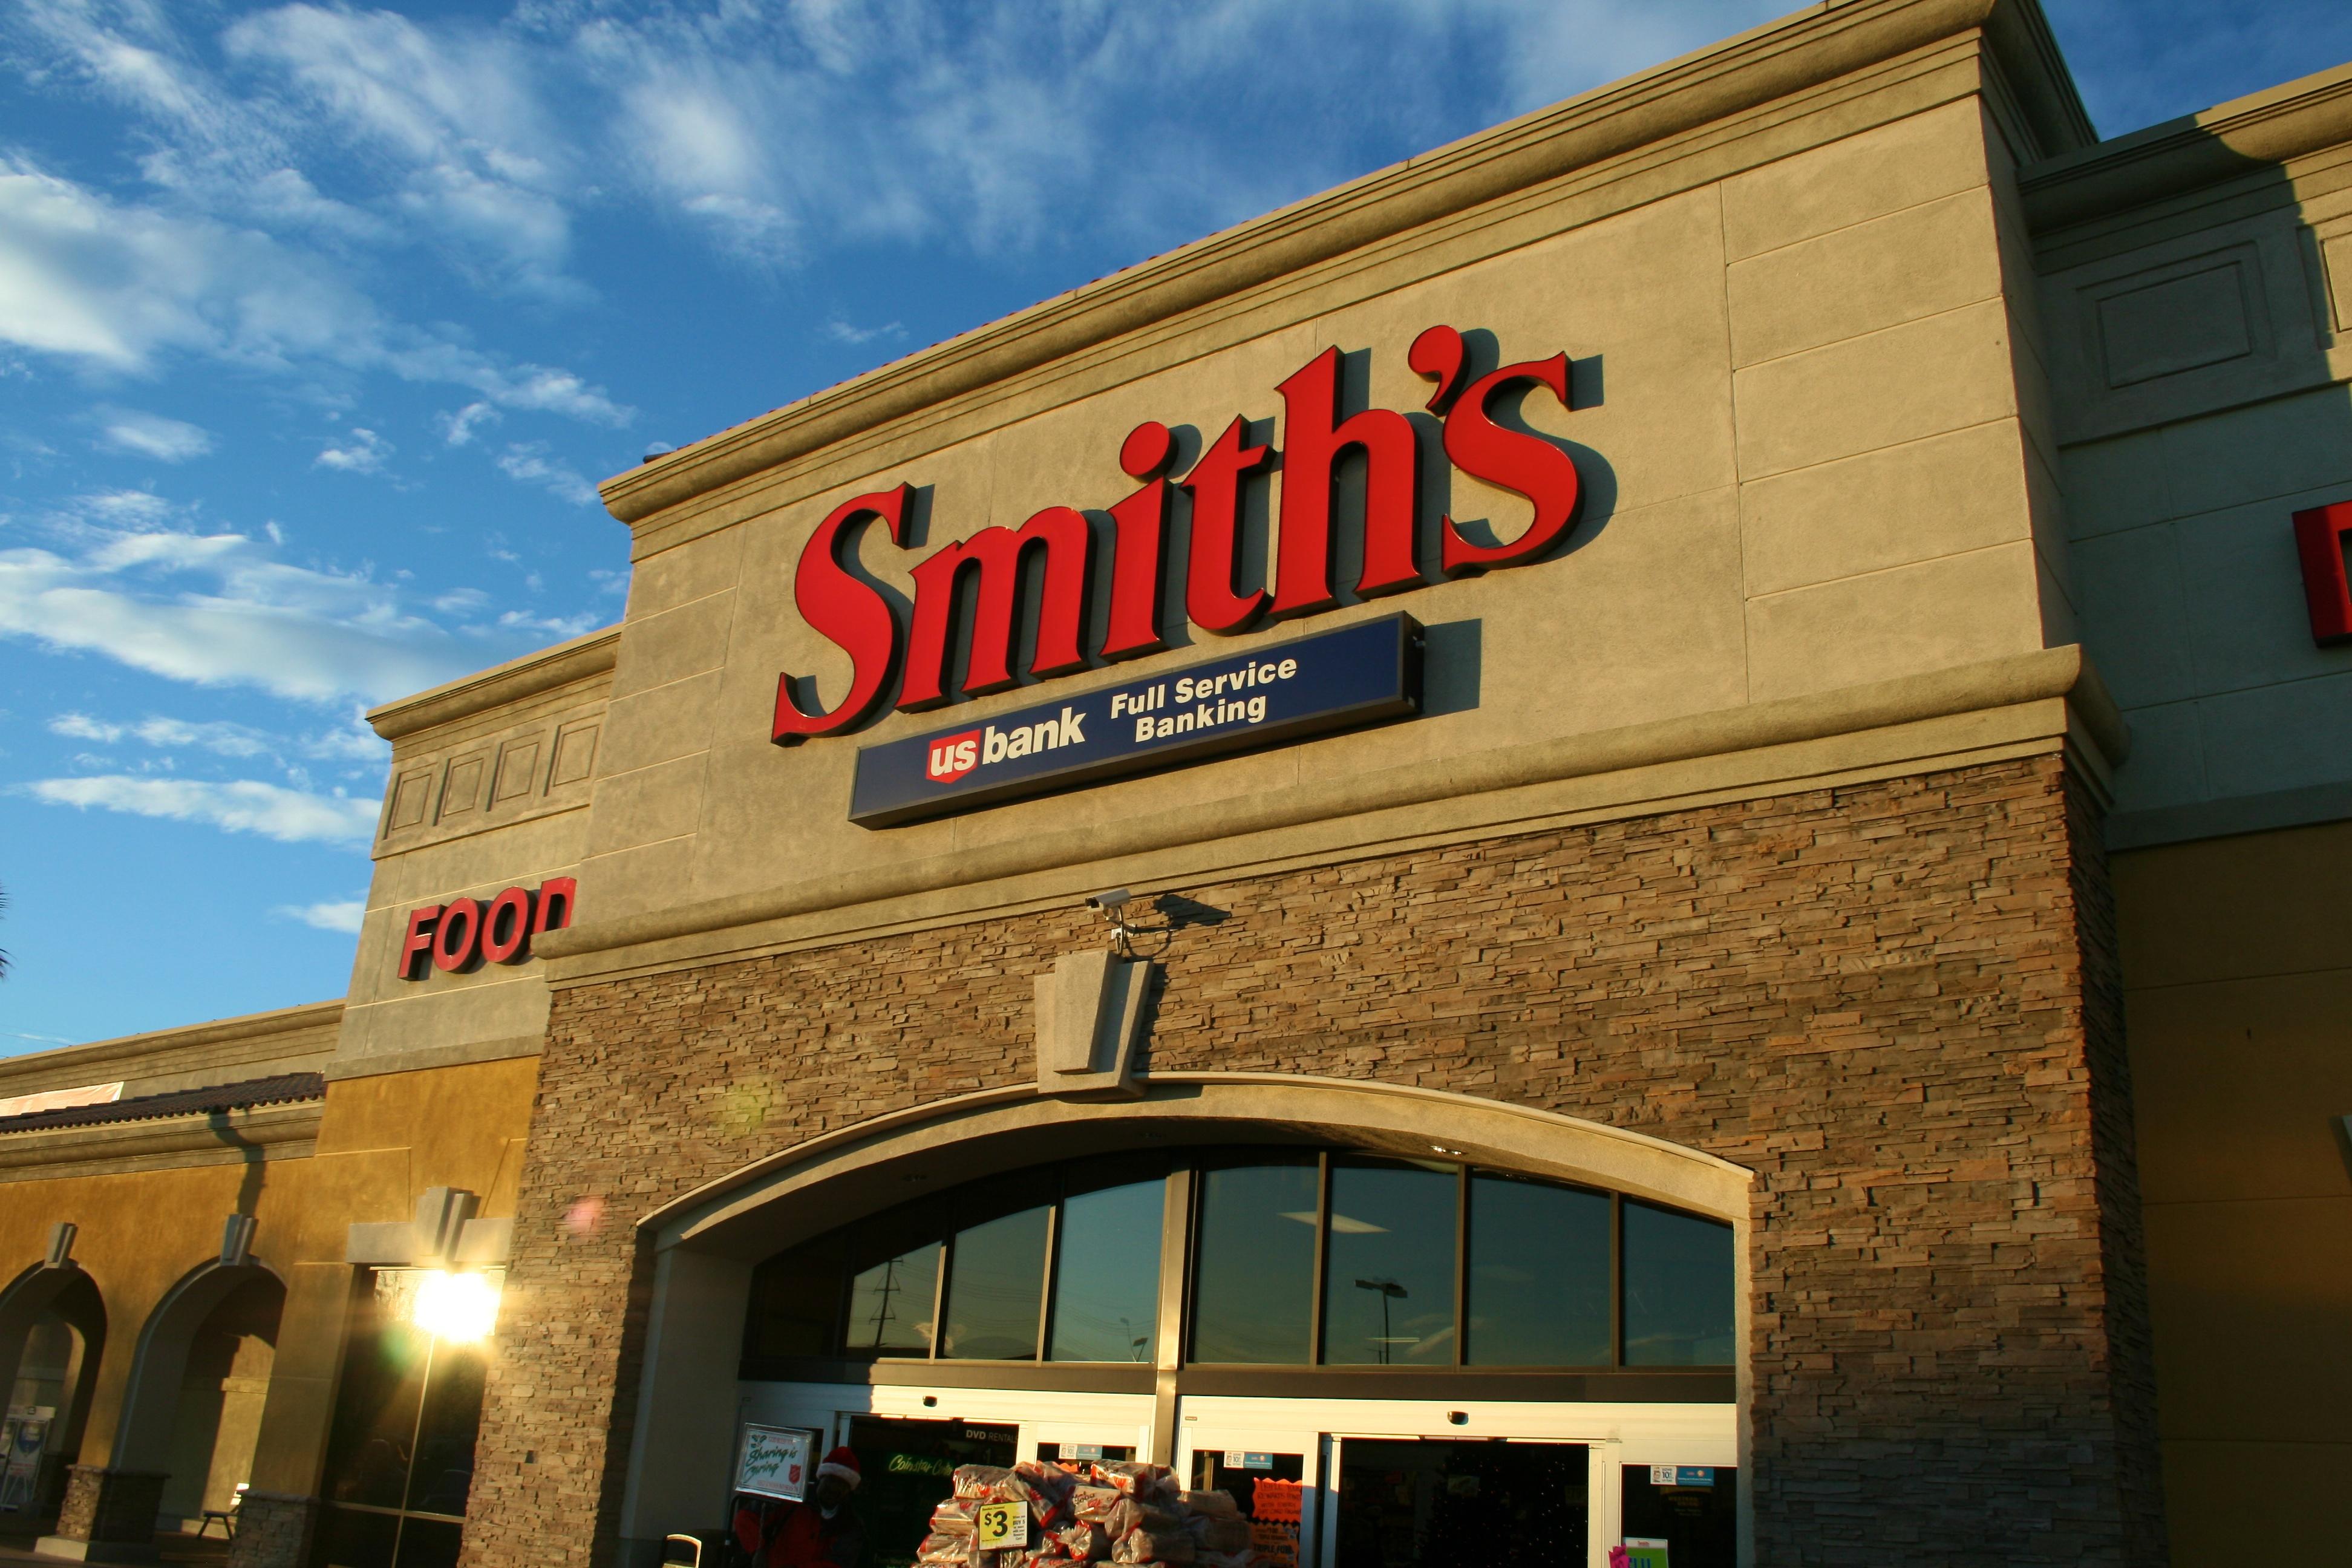 Smith's Salt Lake City (801)466-3325